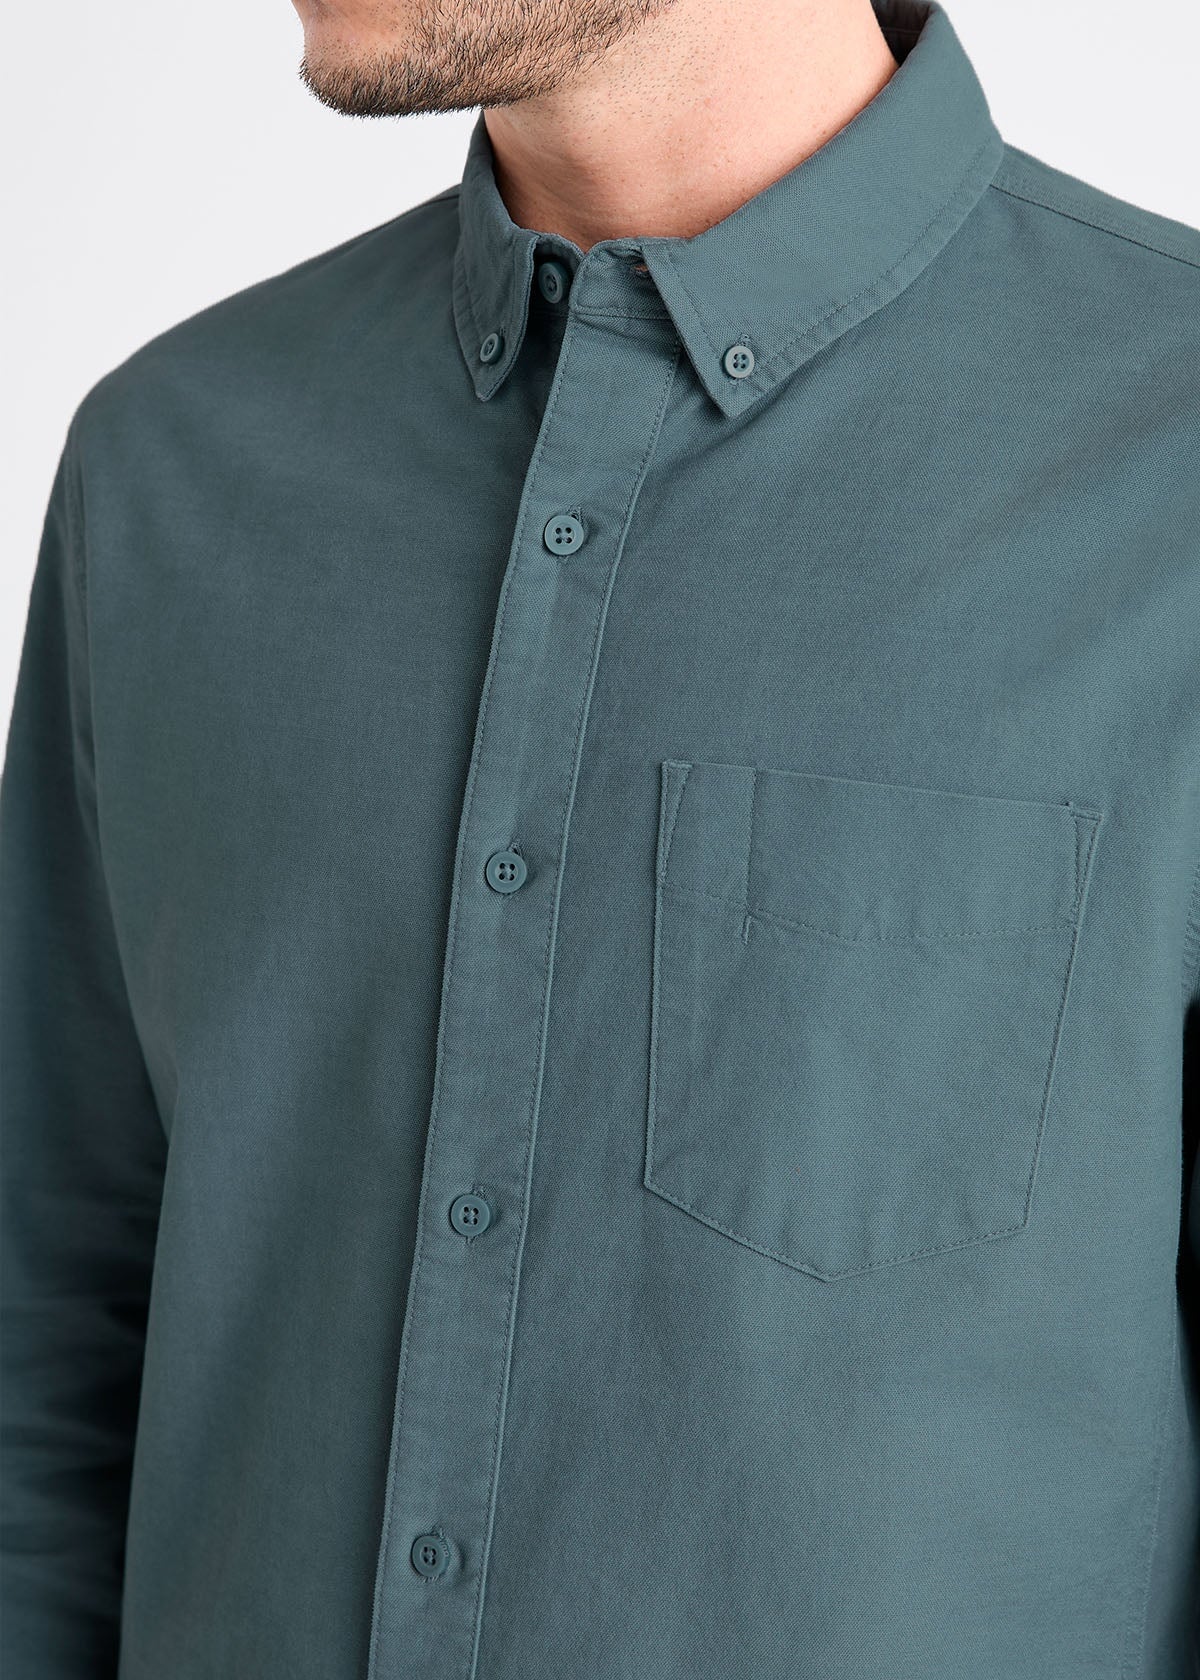 mens blue stretch button down shirt chest pocket detail